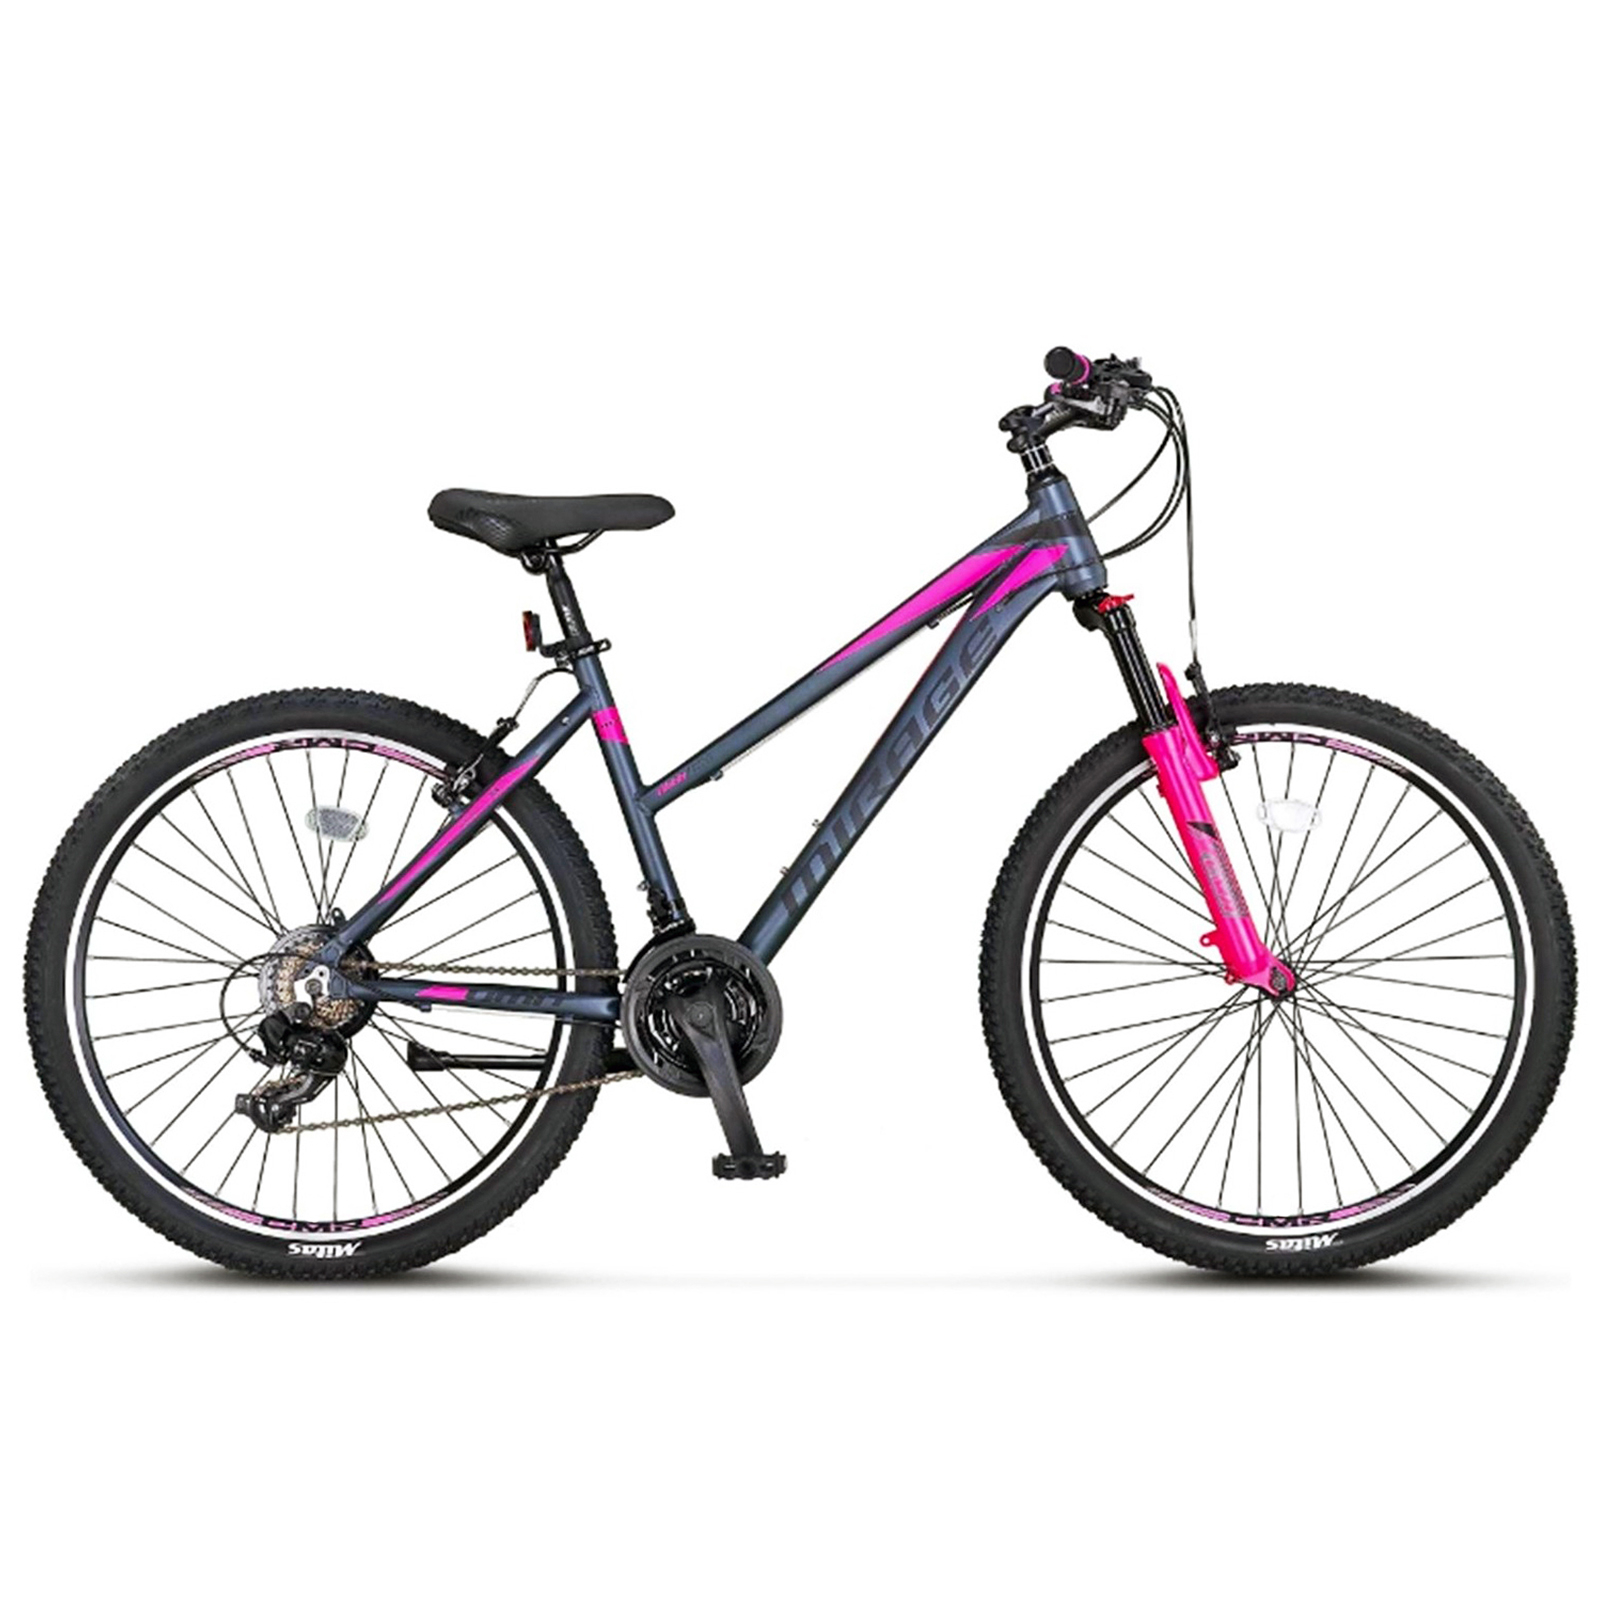 Bicicleta umit mirage lady 2d, roti 26 antracit roz